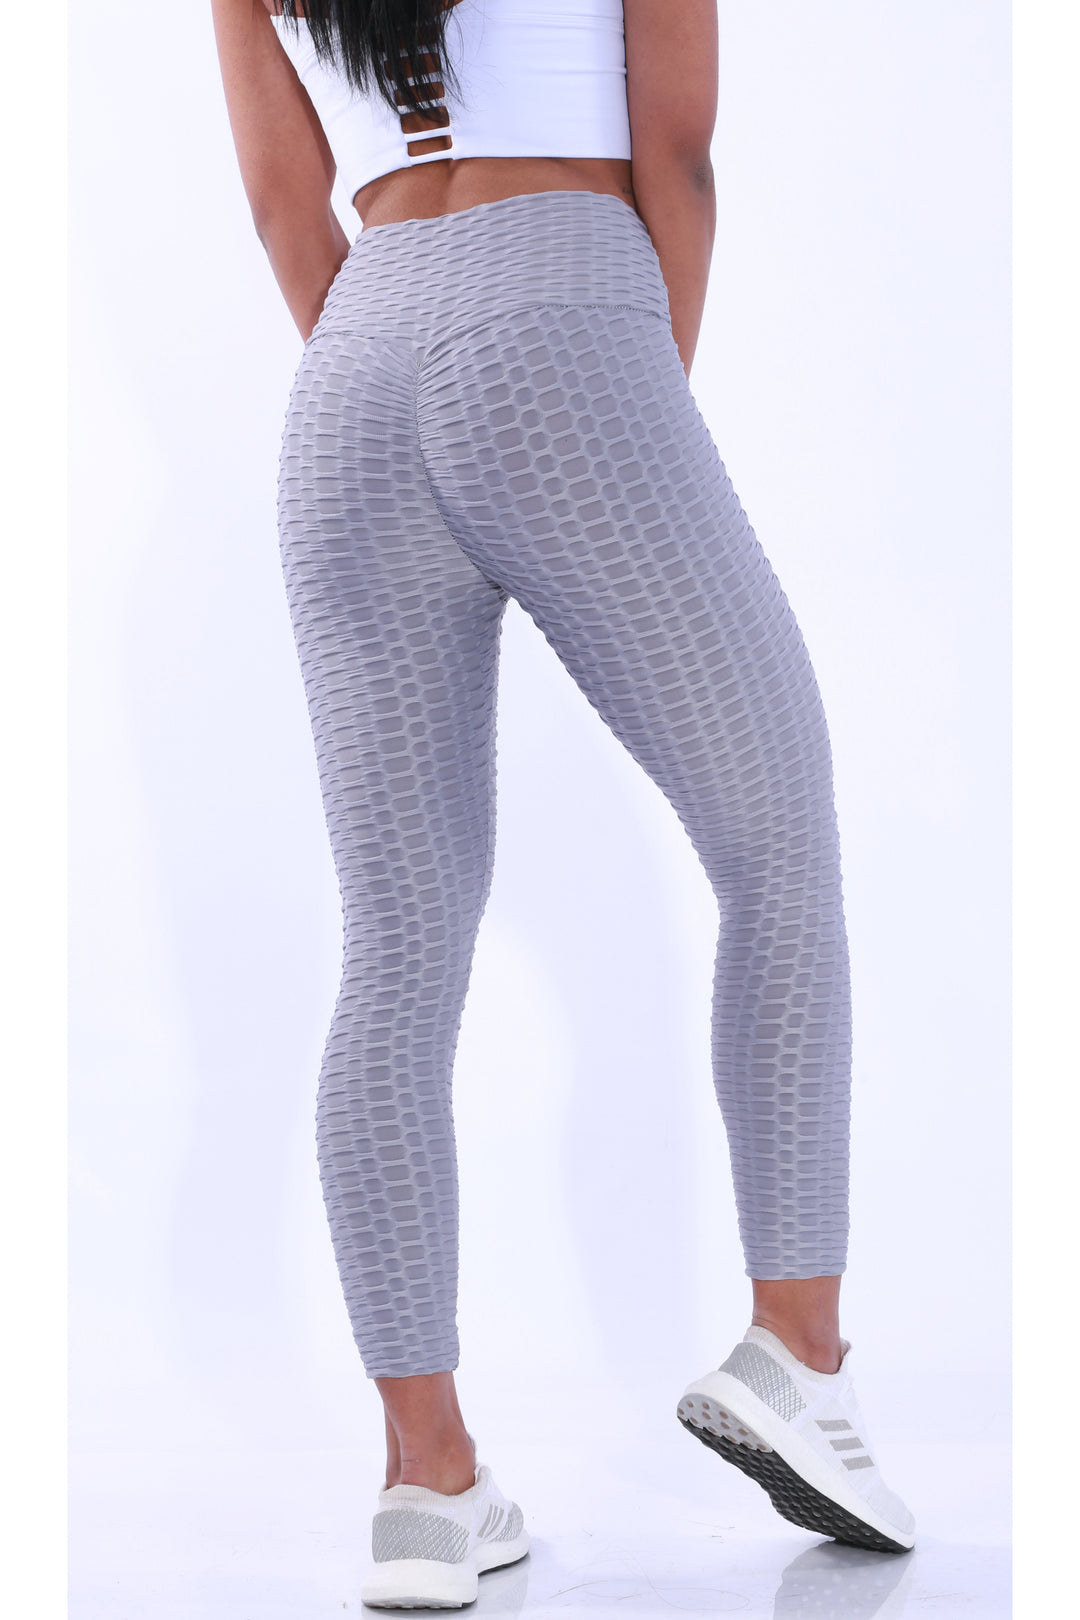 Shapewear TNG Scrunchies - Tik Tok style Anti cellulite leggings - Greyaos-init aos-animate